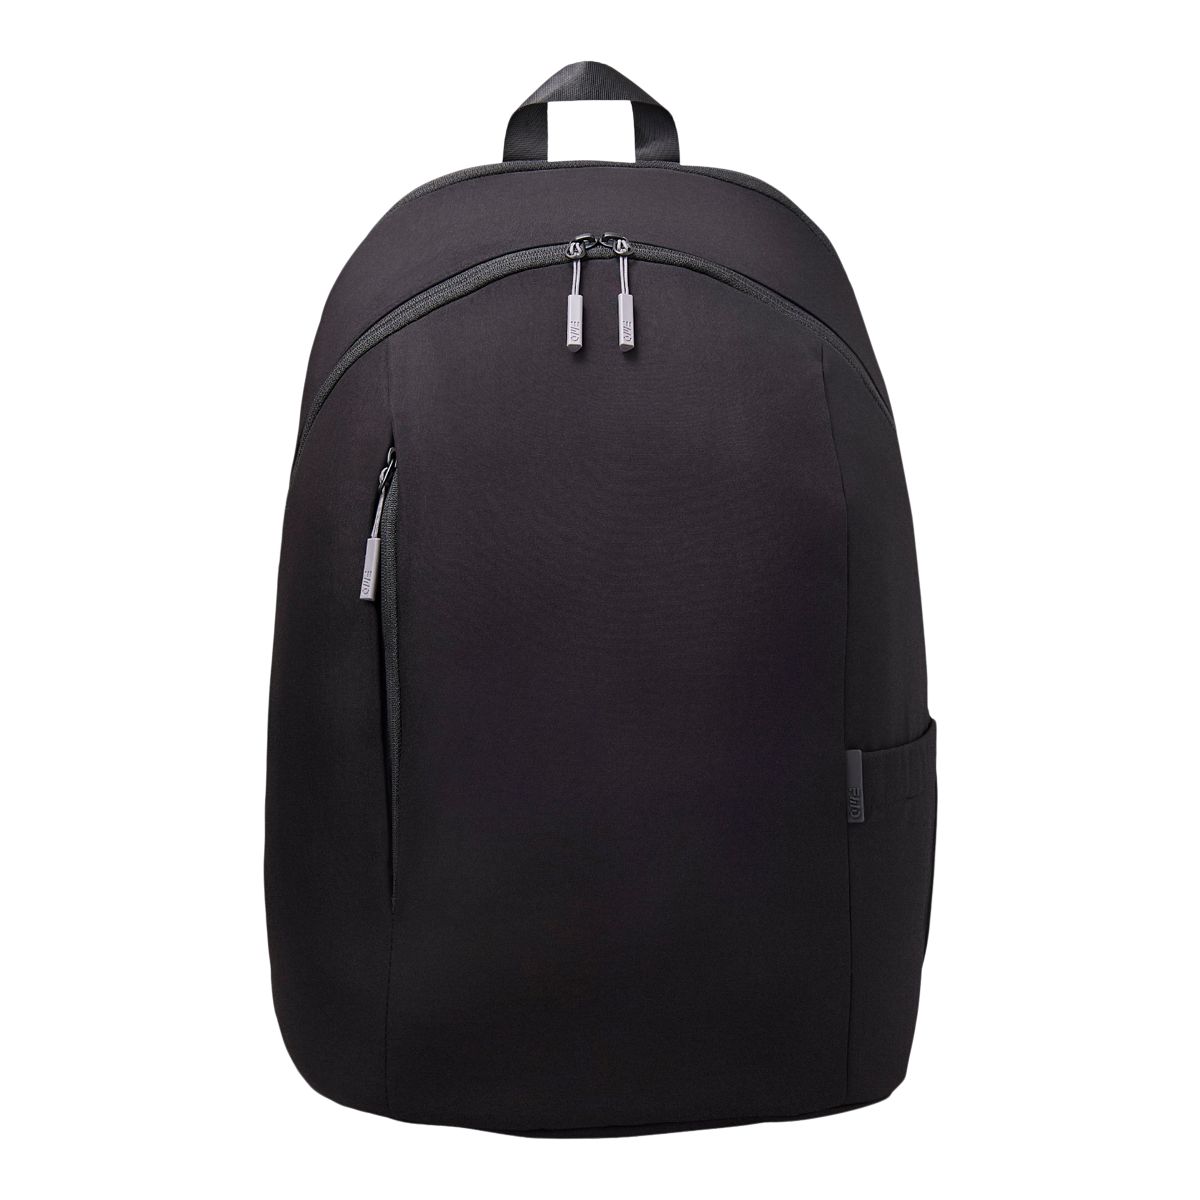 Fwd Unisex Pleated School/Gym Backpack, 24 L, Laptop Sleeve | Sportchek